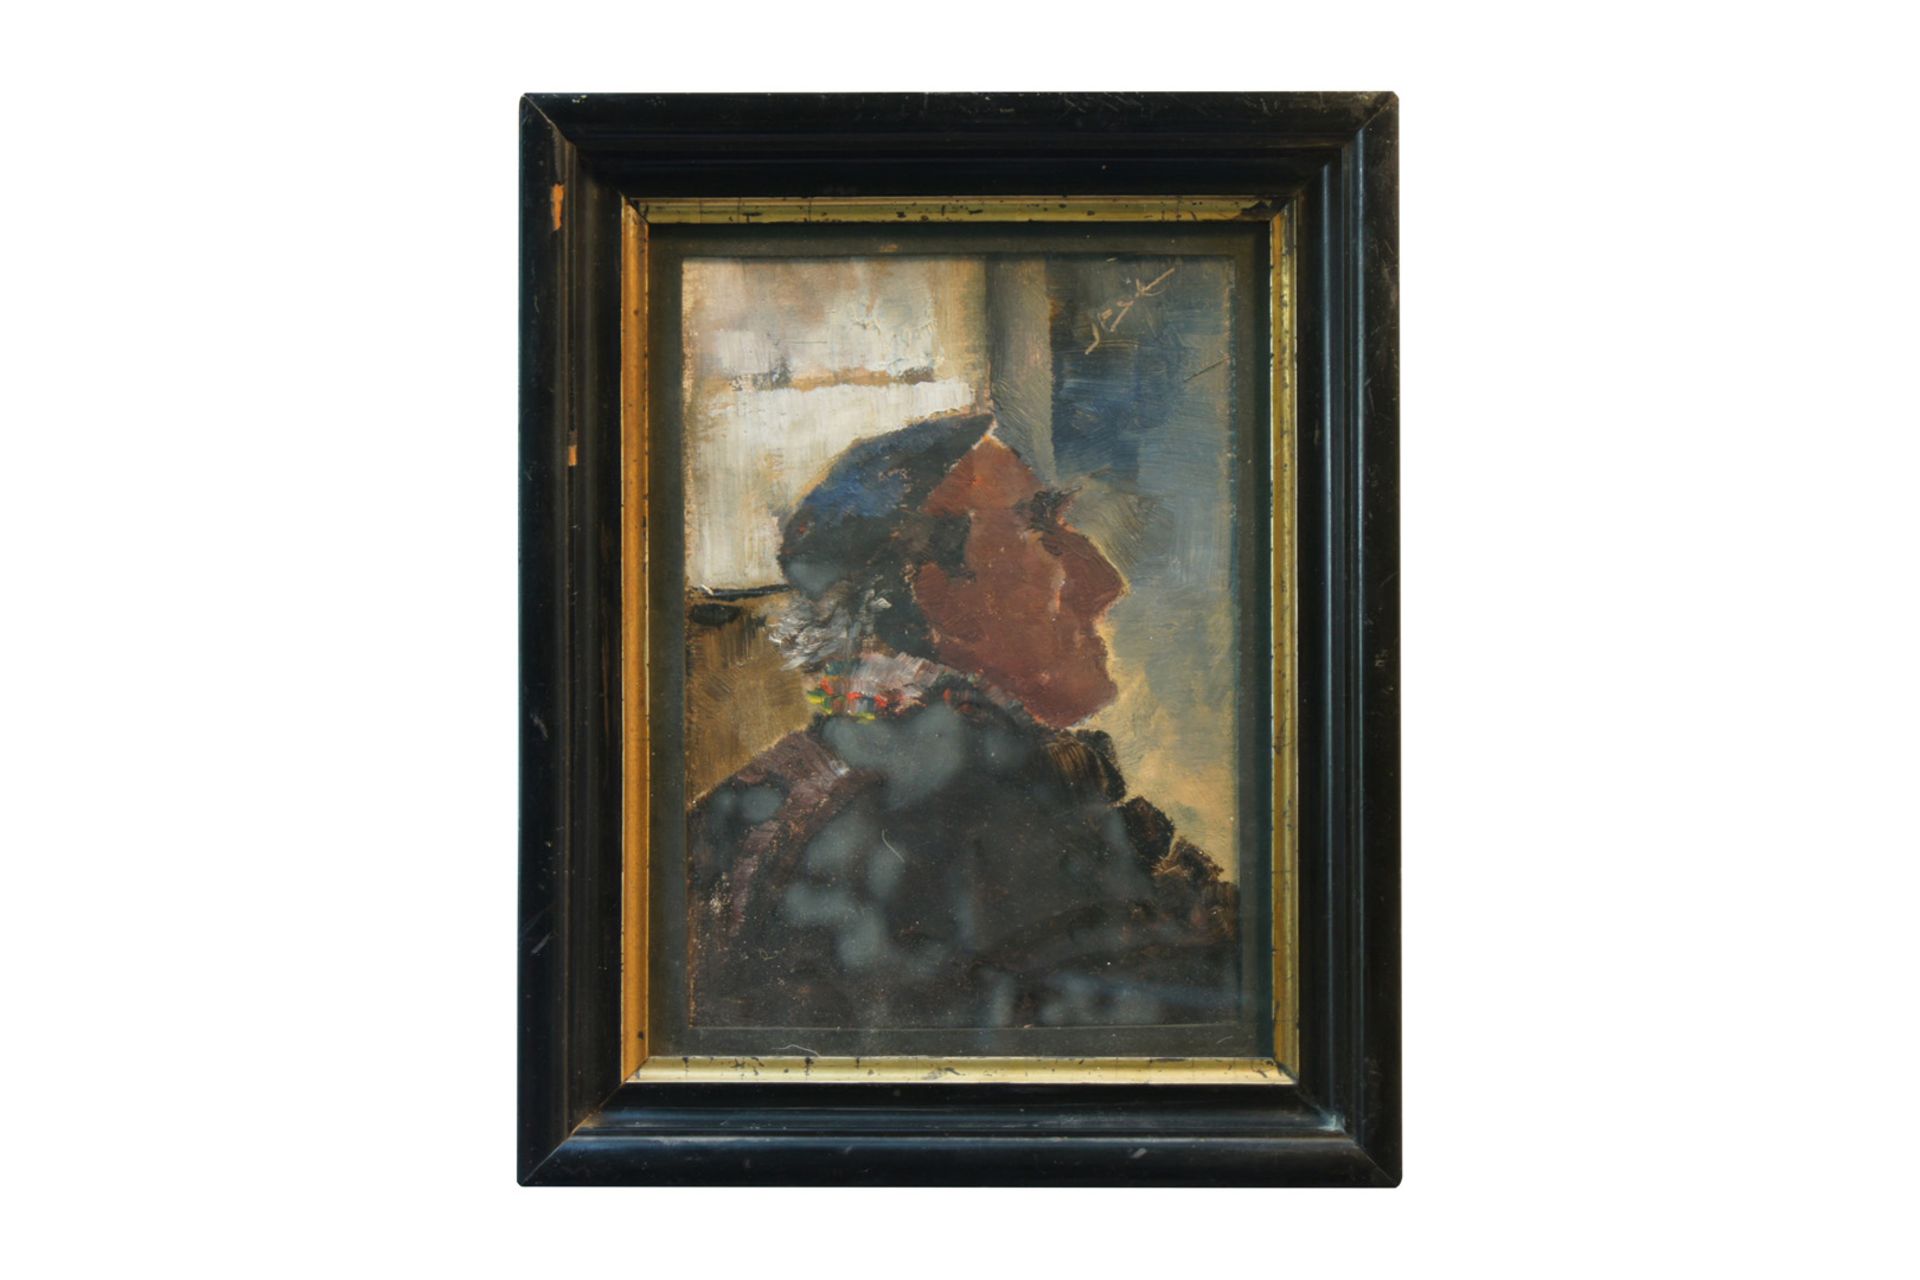 Peter Schmidt, Männerportrait, Öl/Pappe, signiert oben rechts, 24 x 18 cm, unter Glas, gerahmt